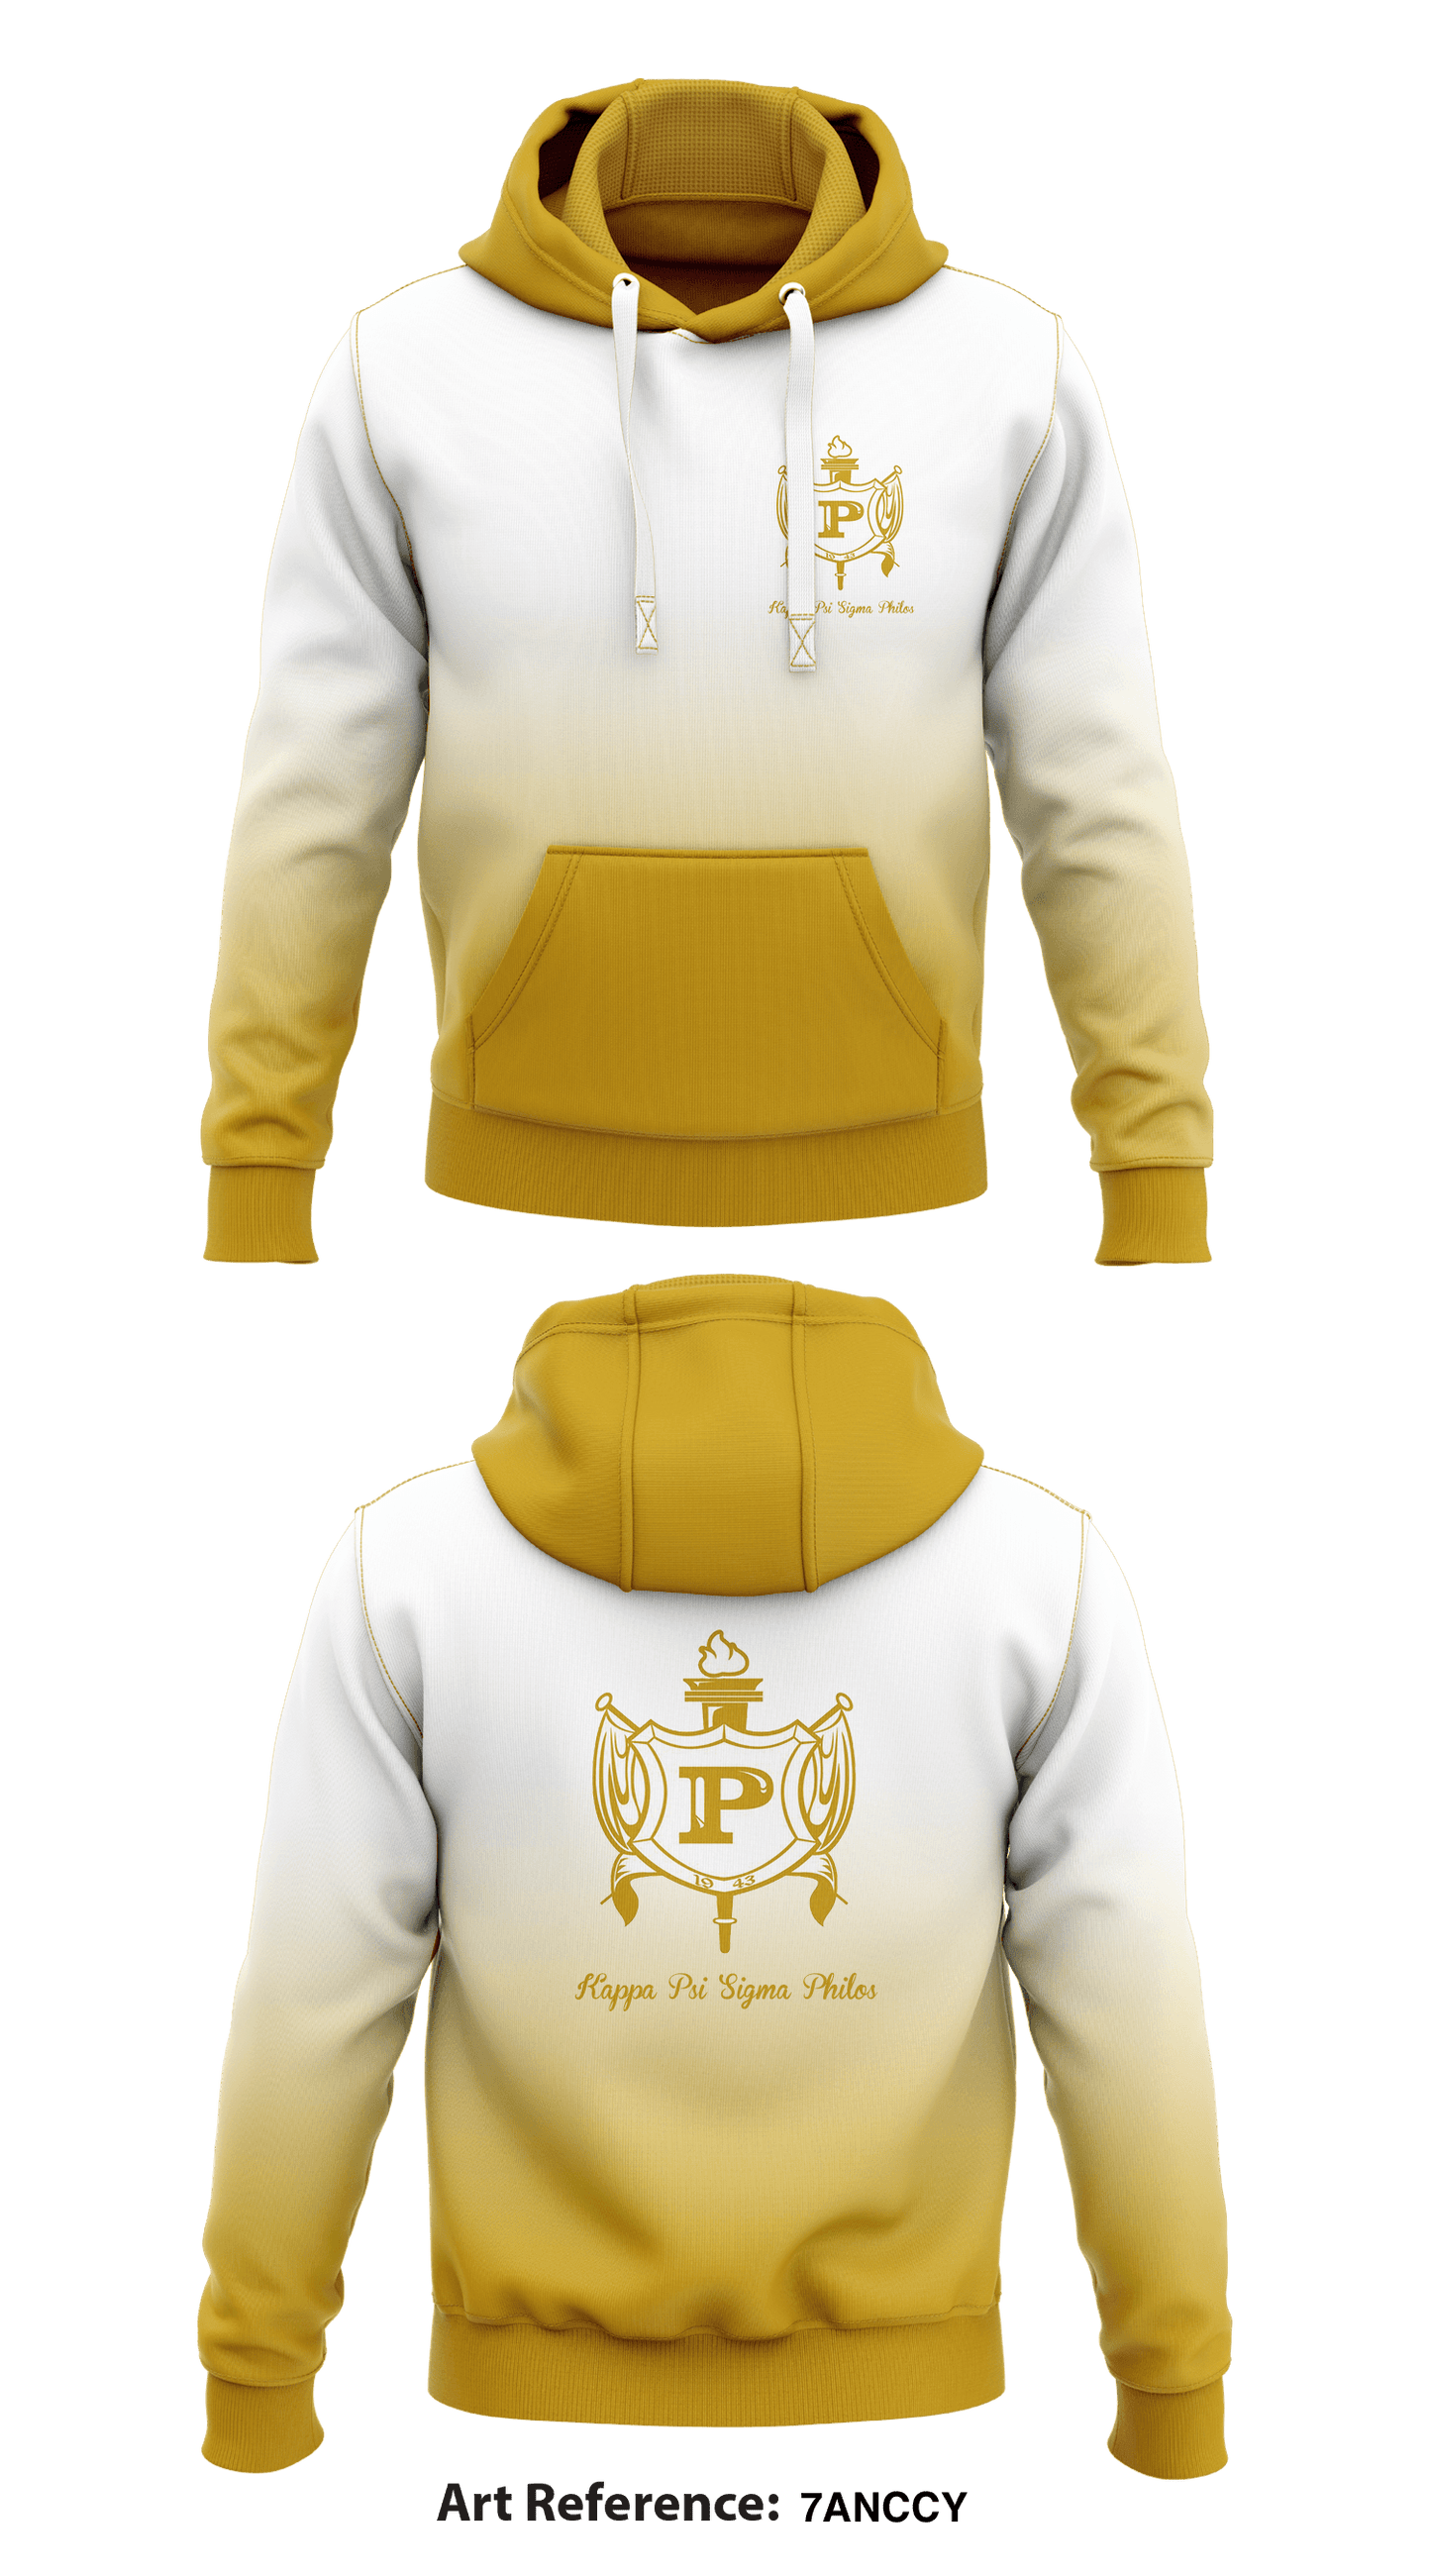 Kappa Psi Sigma Philos Store 1 Core Men's Hooded Performance Sweatshirt - 7AnccY